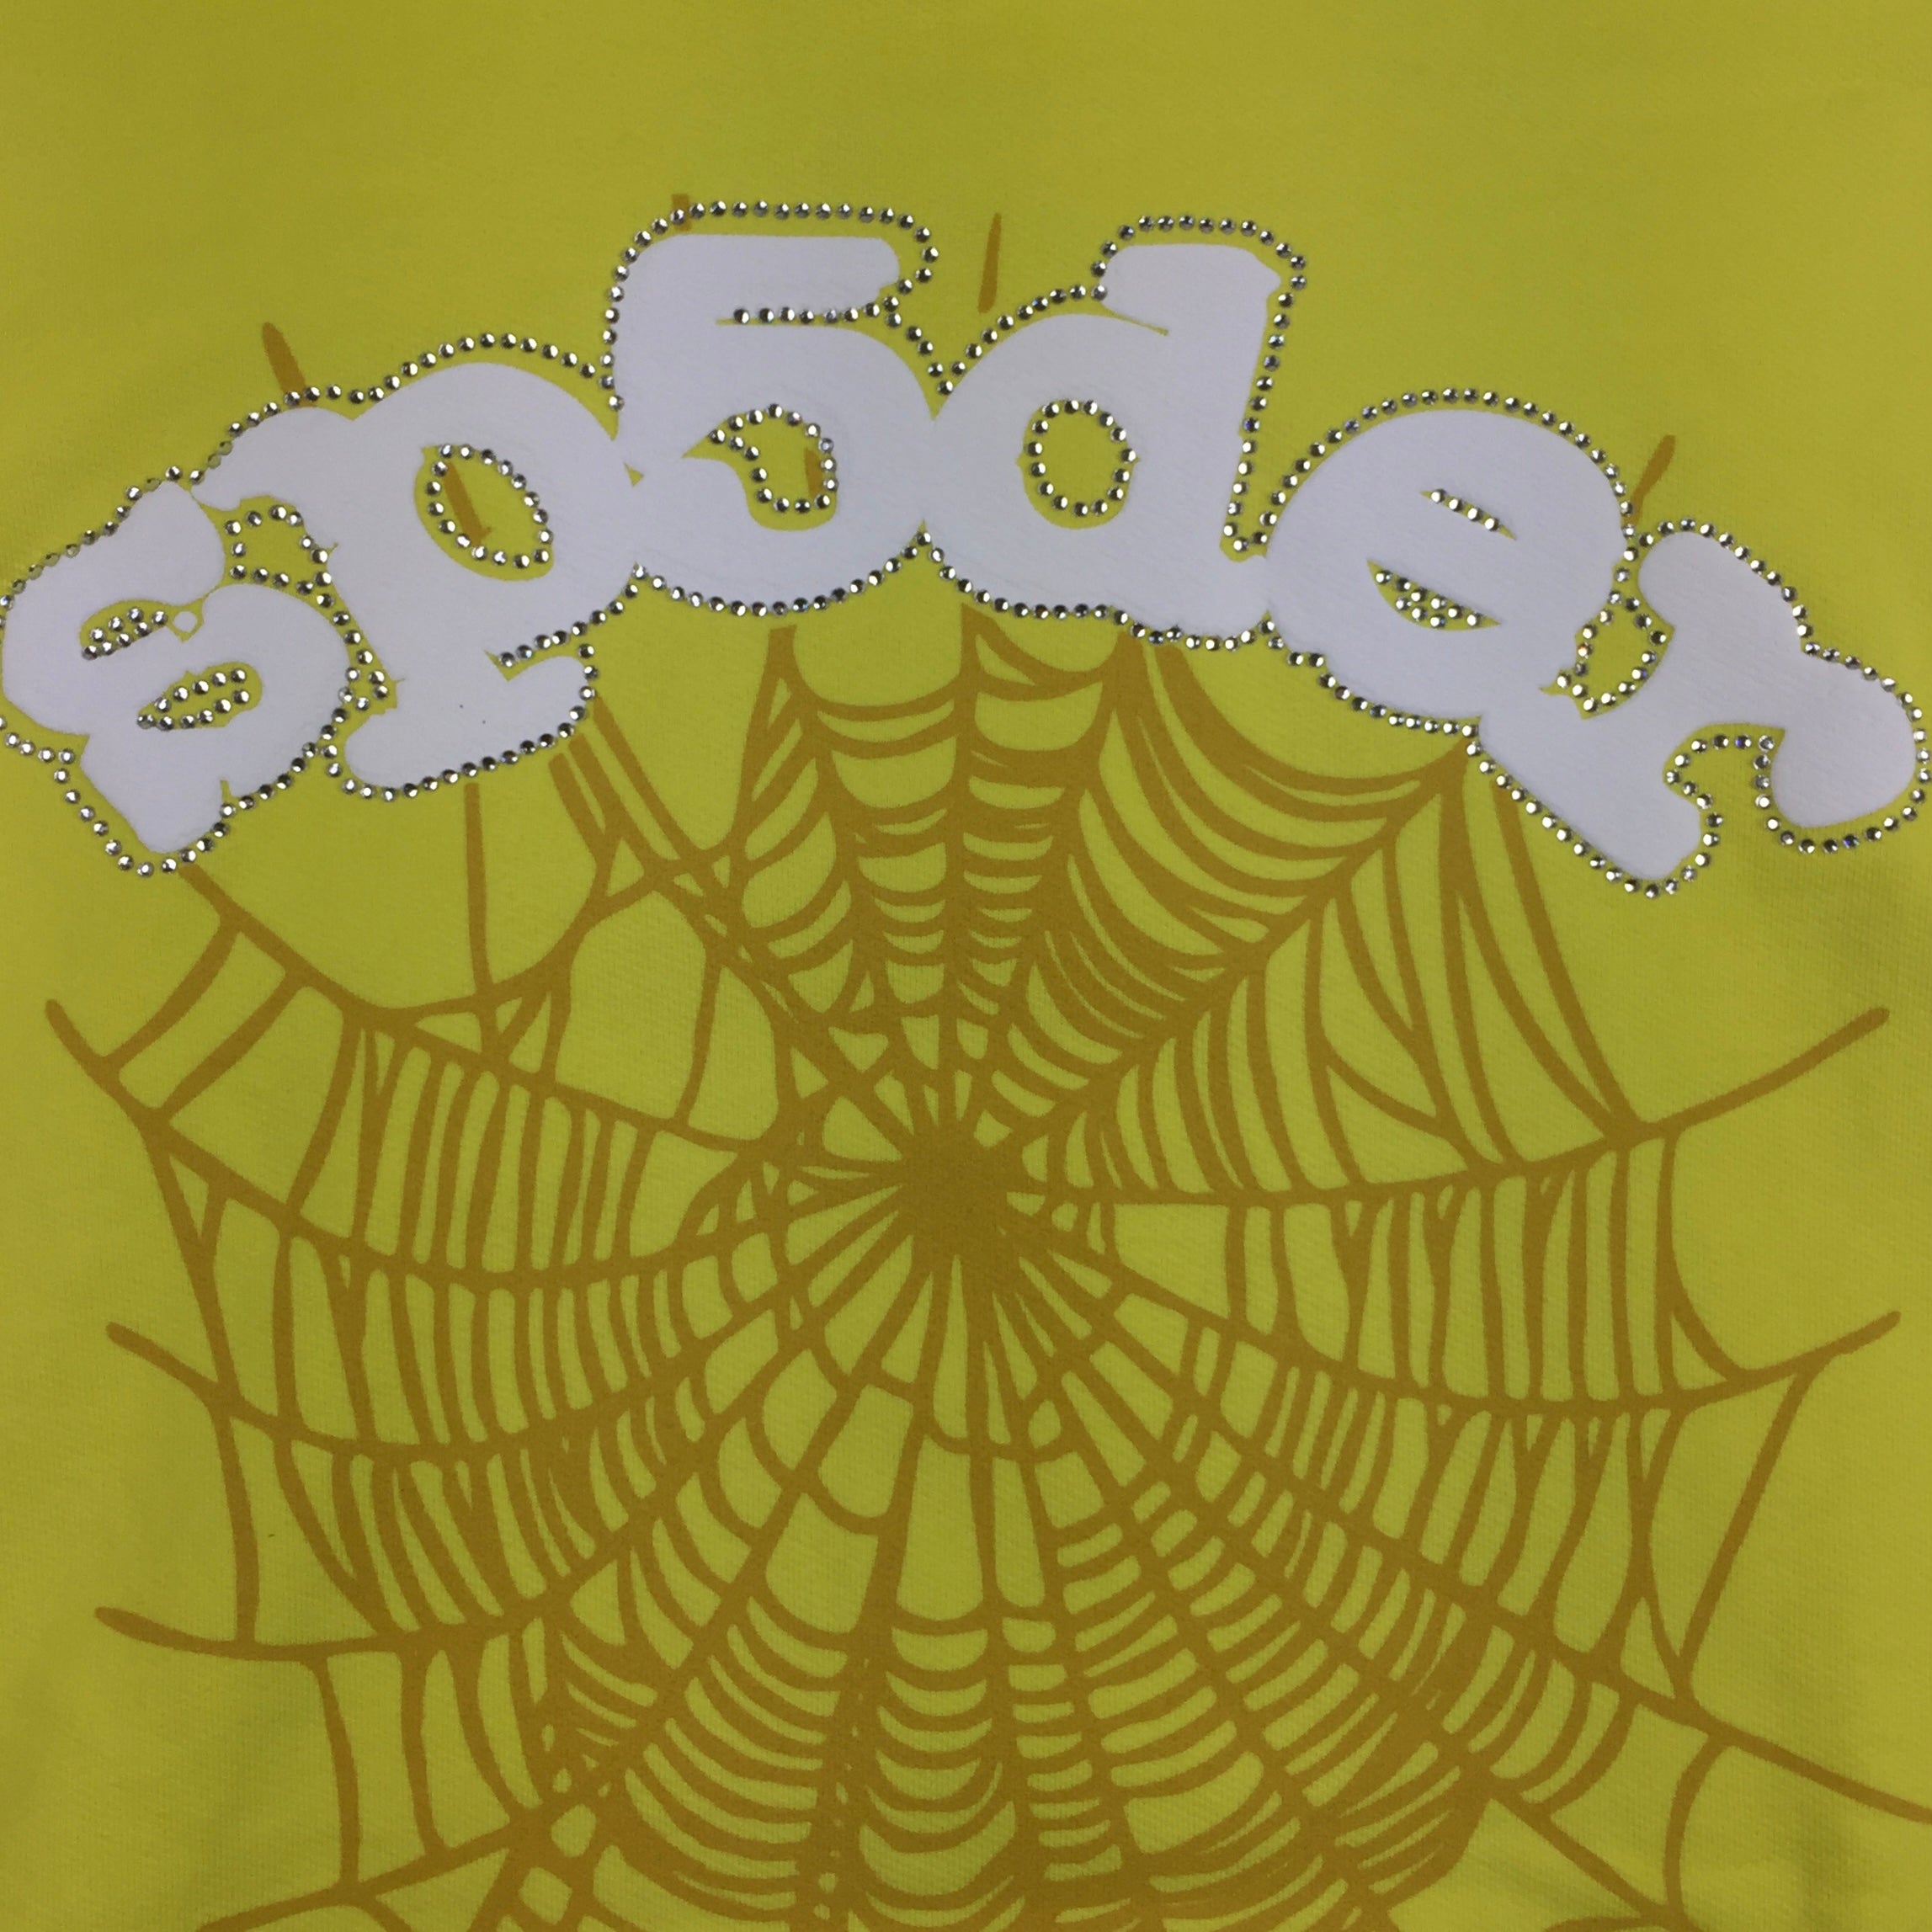 Spider Worldwide Yellow Websuit Hoodie